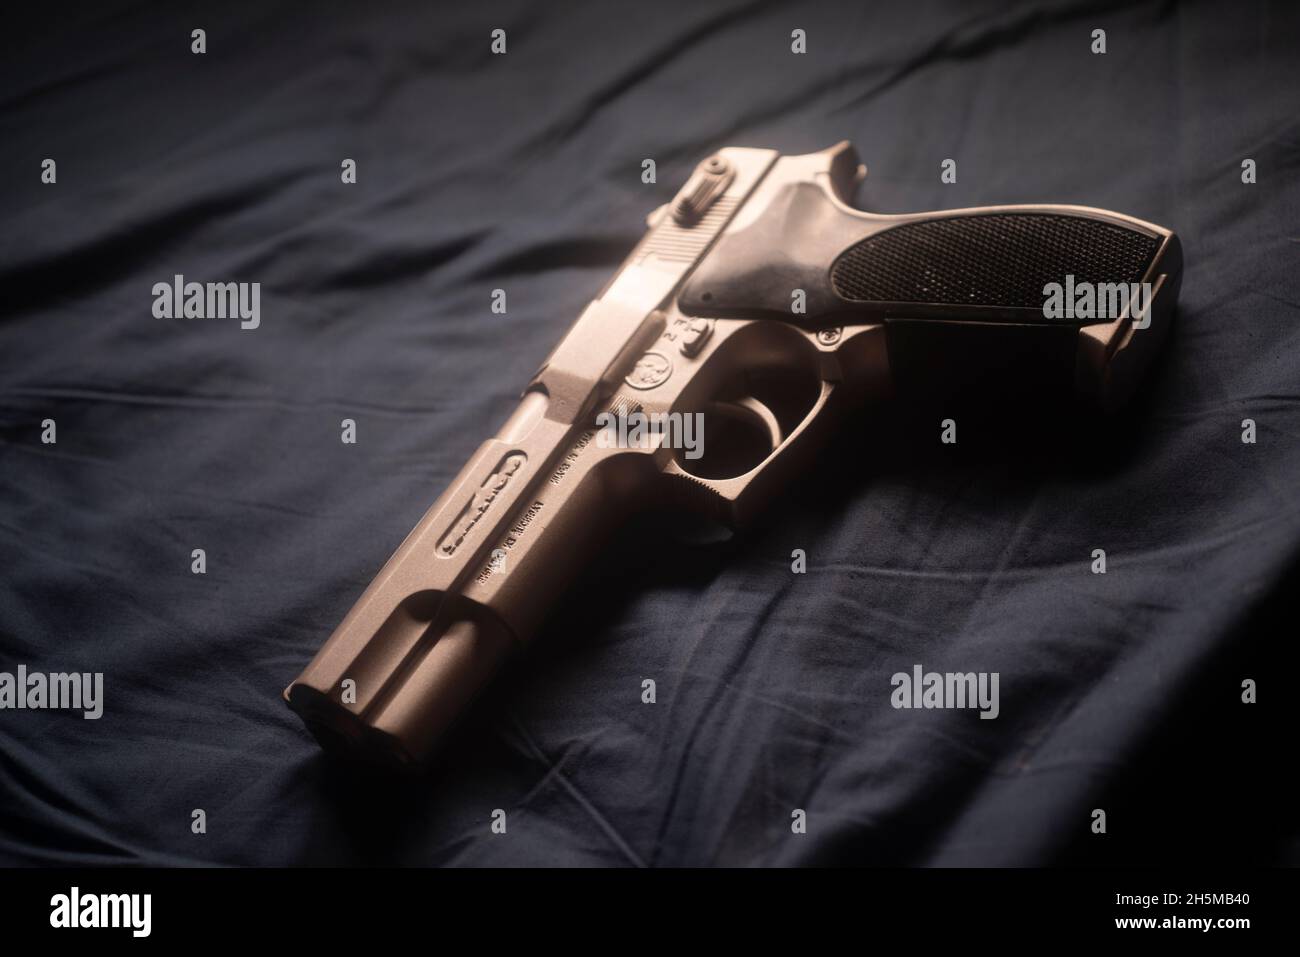 9mm pistol on bed